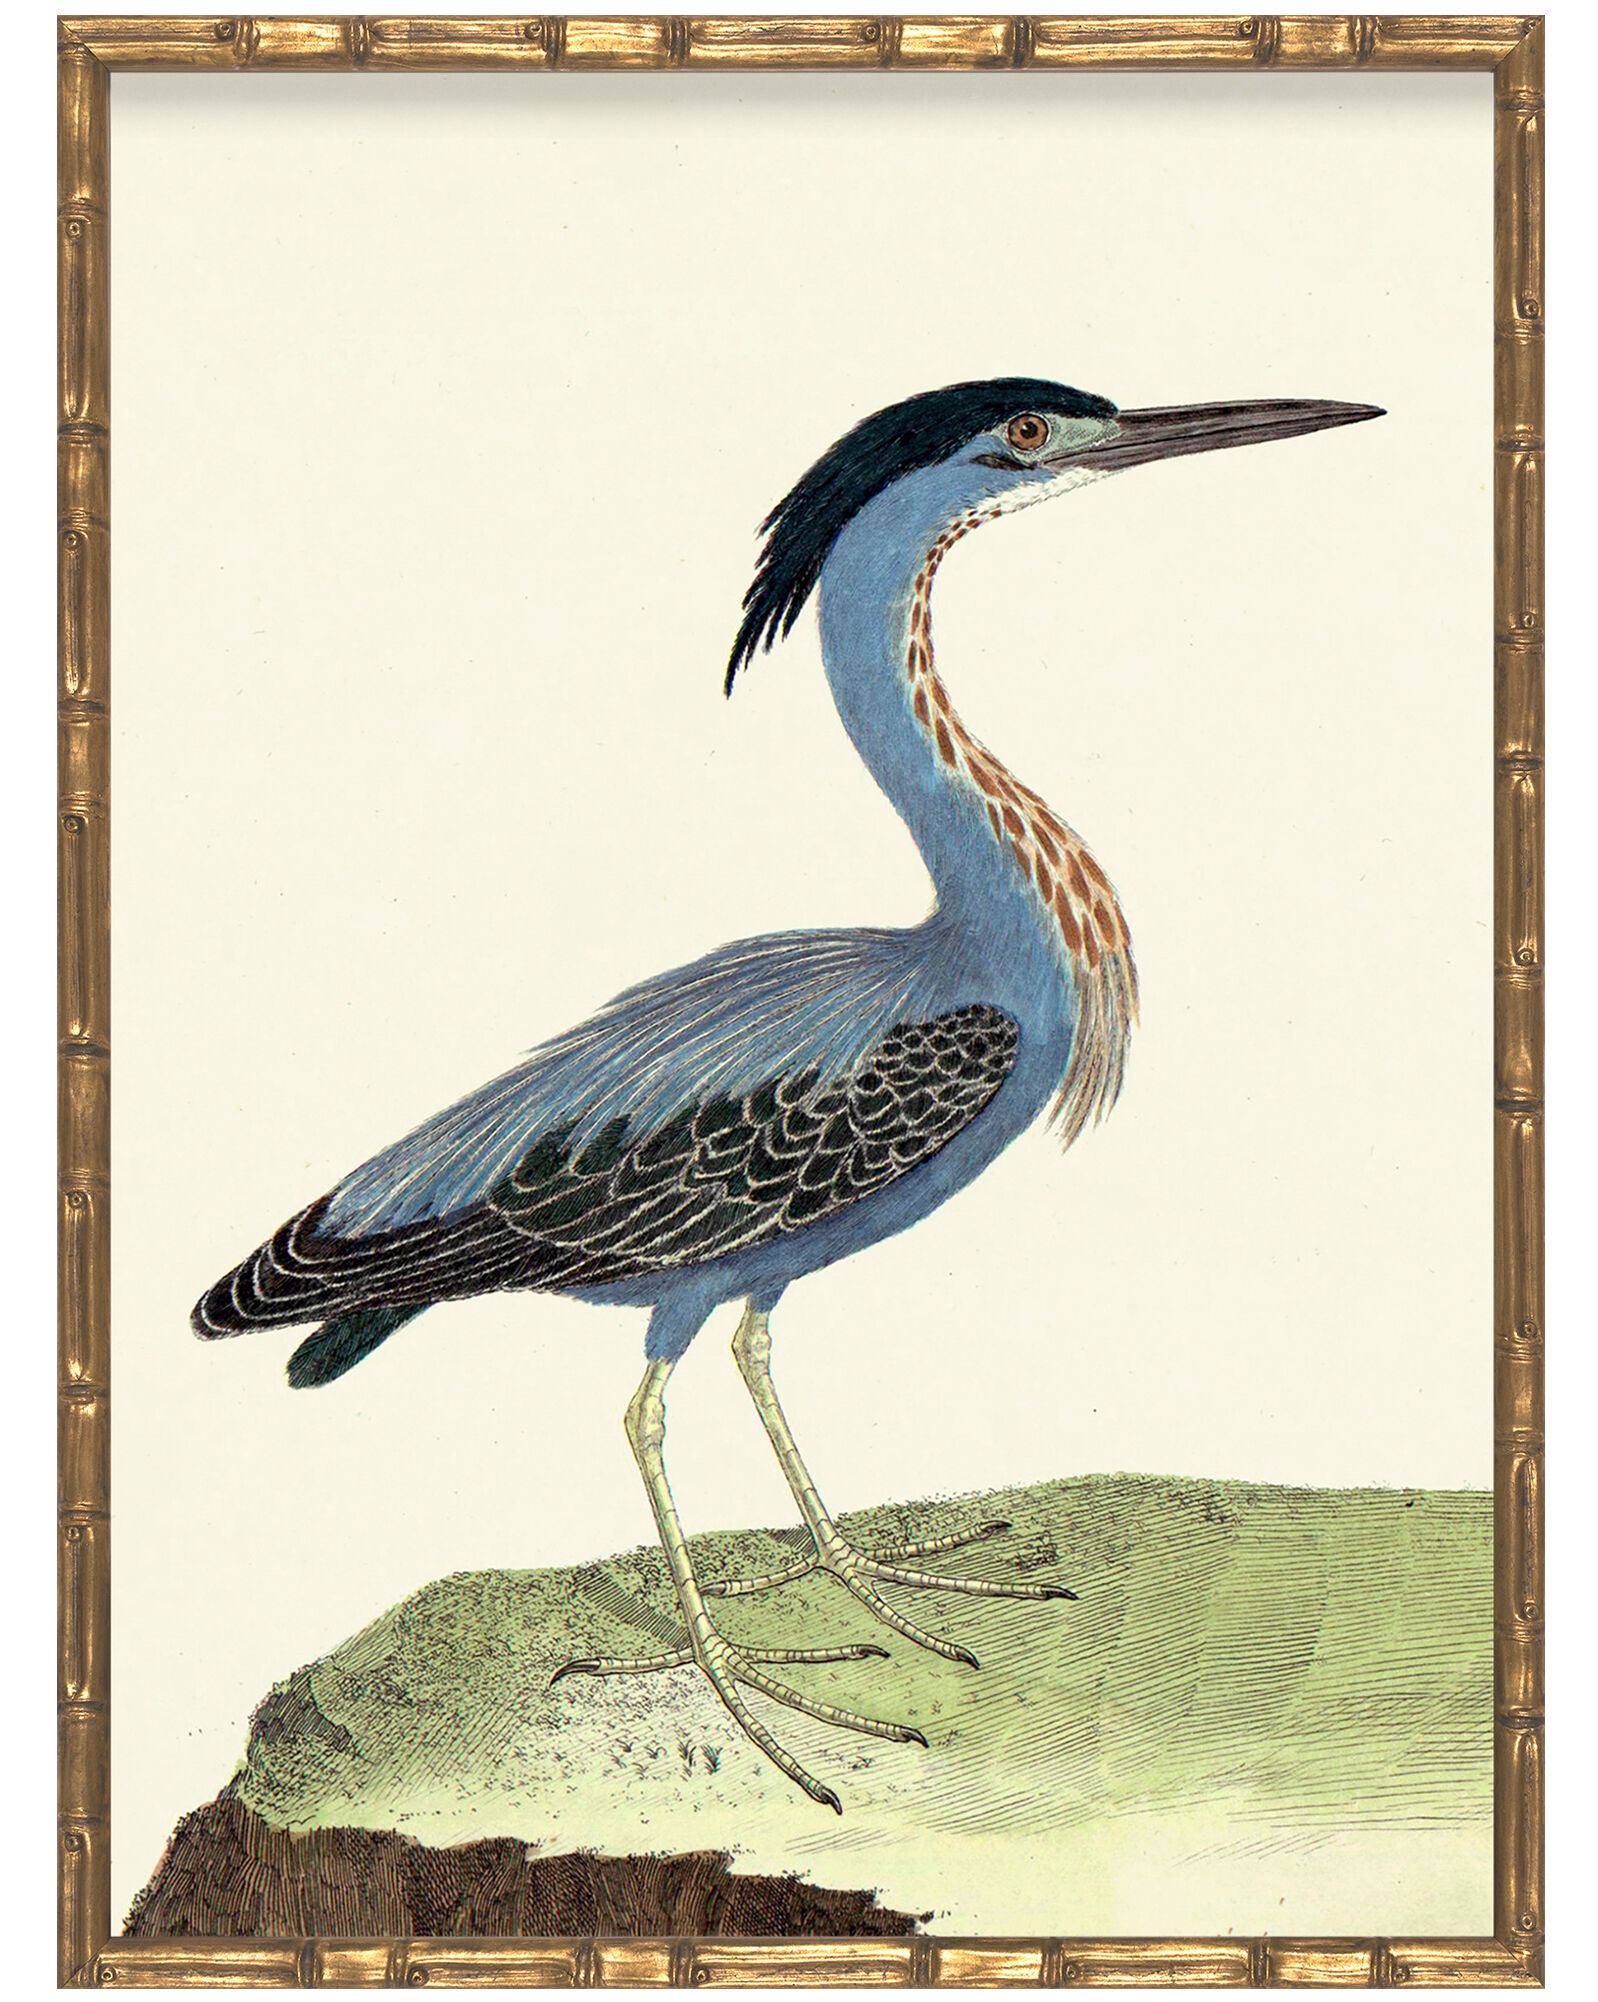 Vintage Bird VII in Bamboo Frame by Whalebone Creek Prints - Image 0